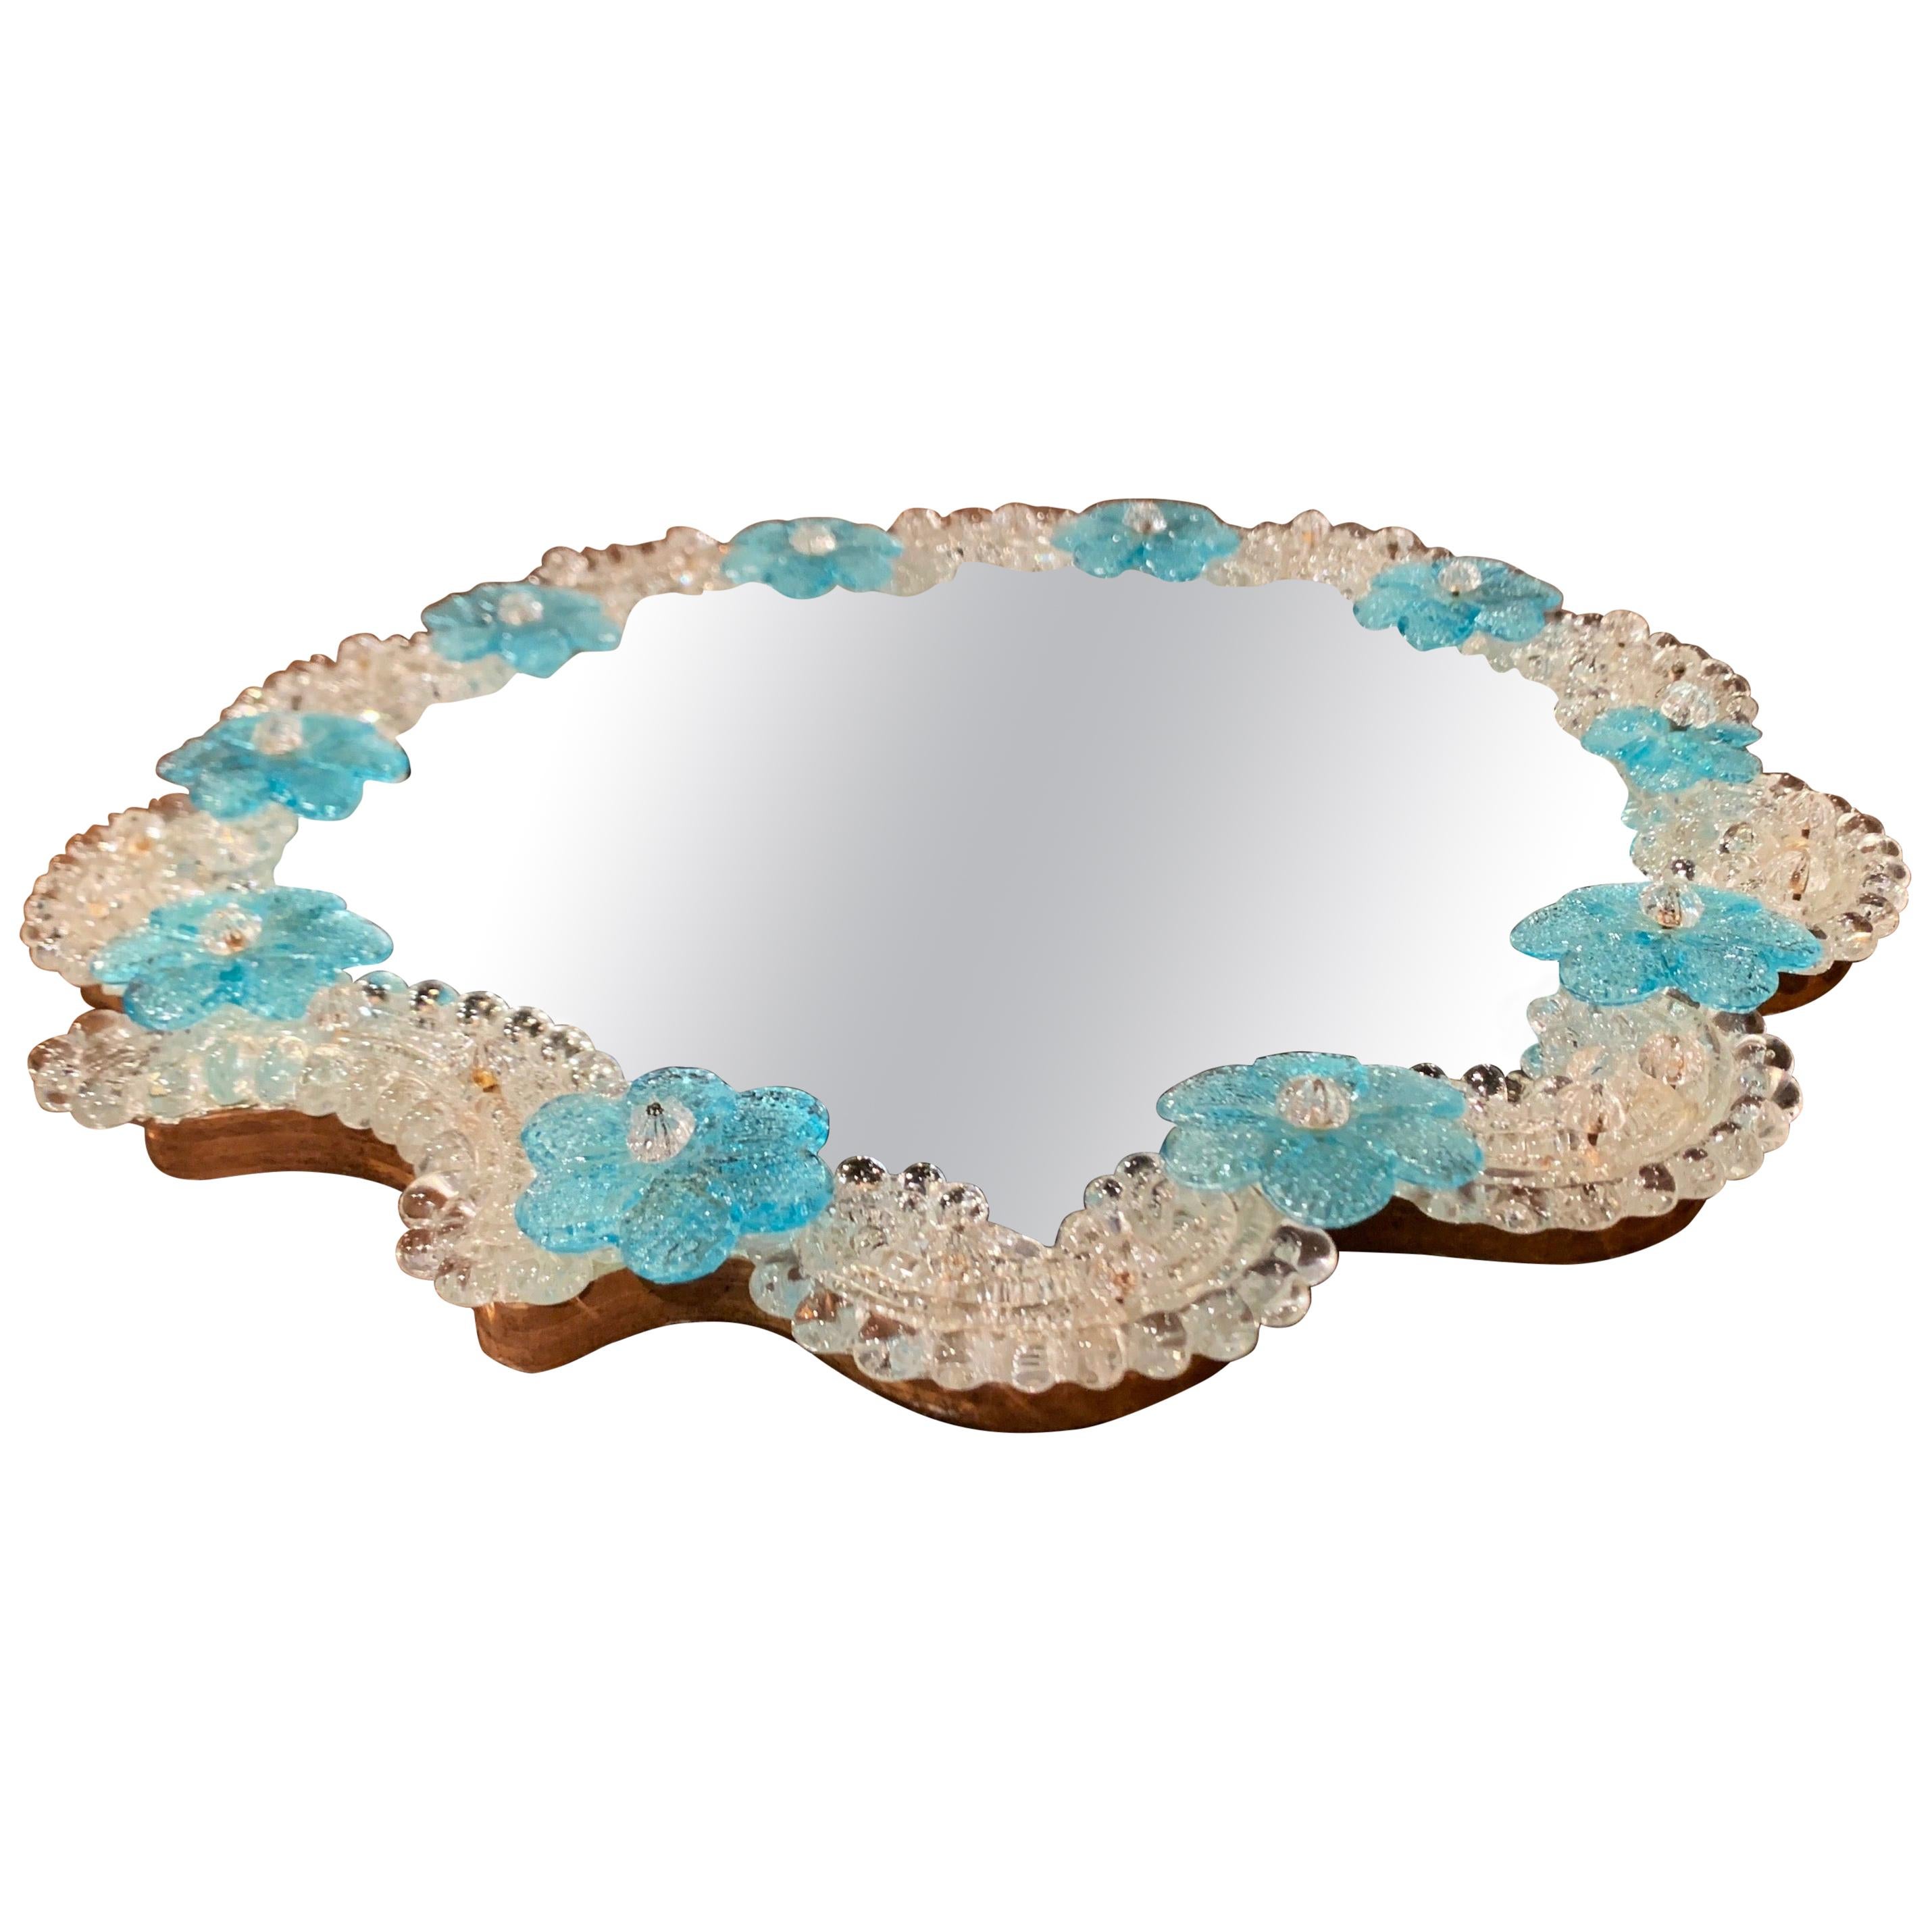 Midcentury Italian Venetian Murano Mirrored Tray Table with Floral Decor